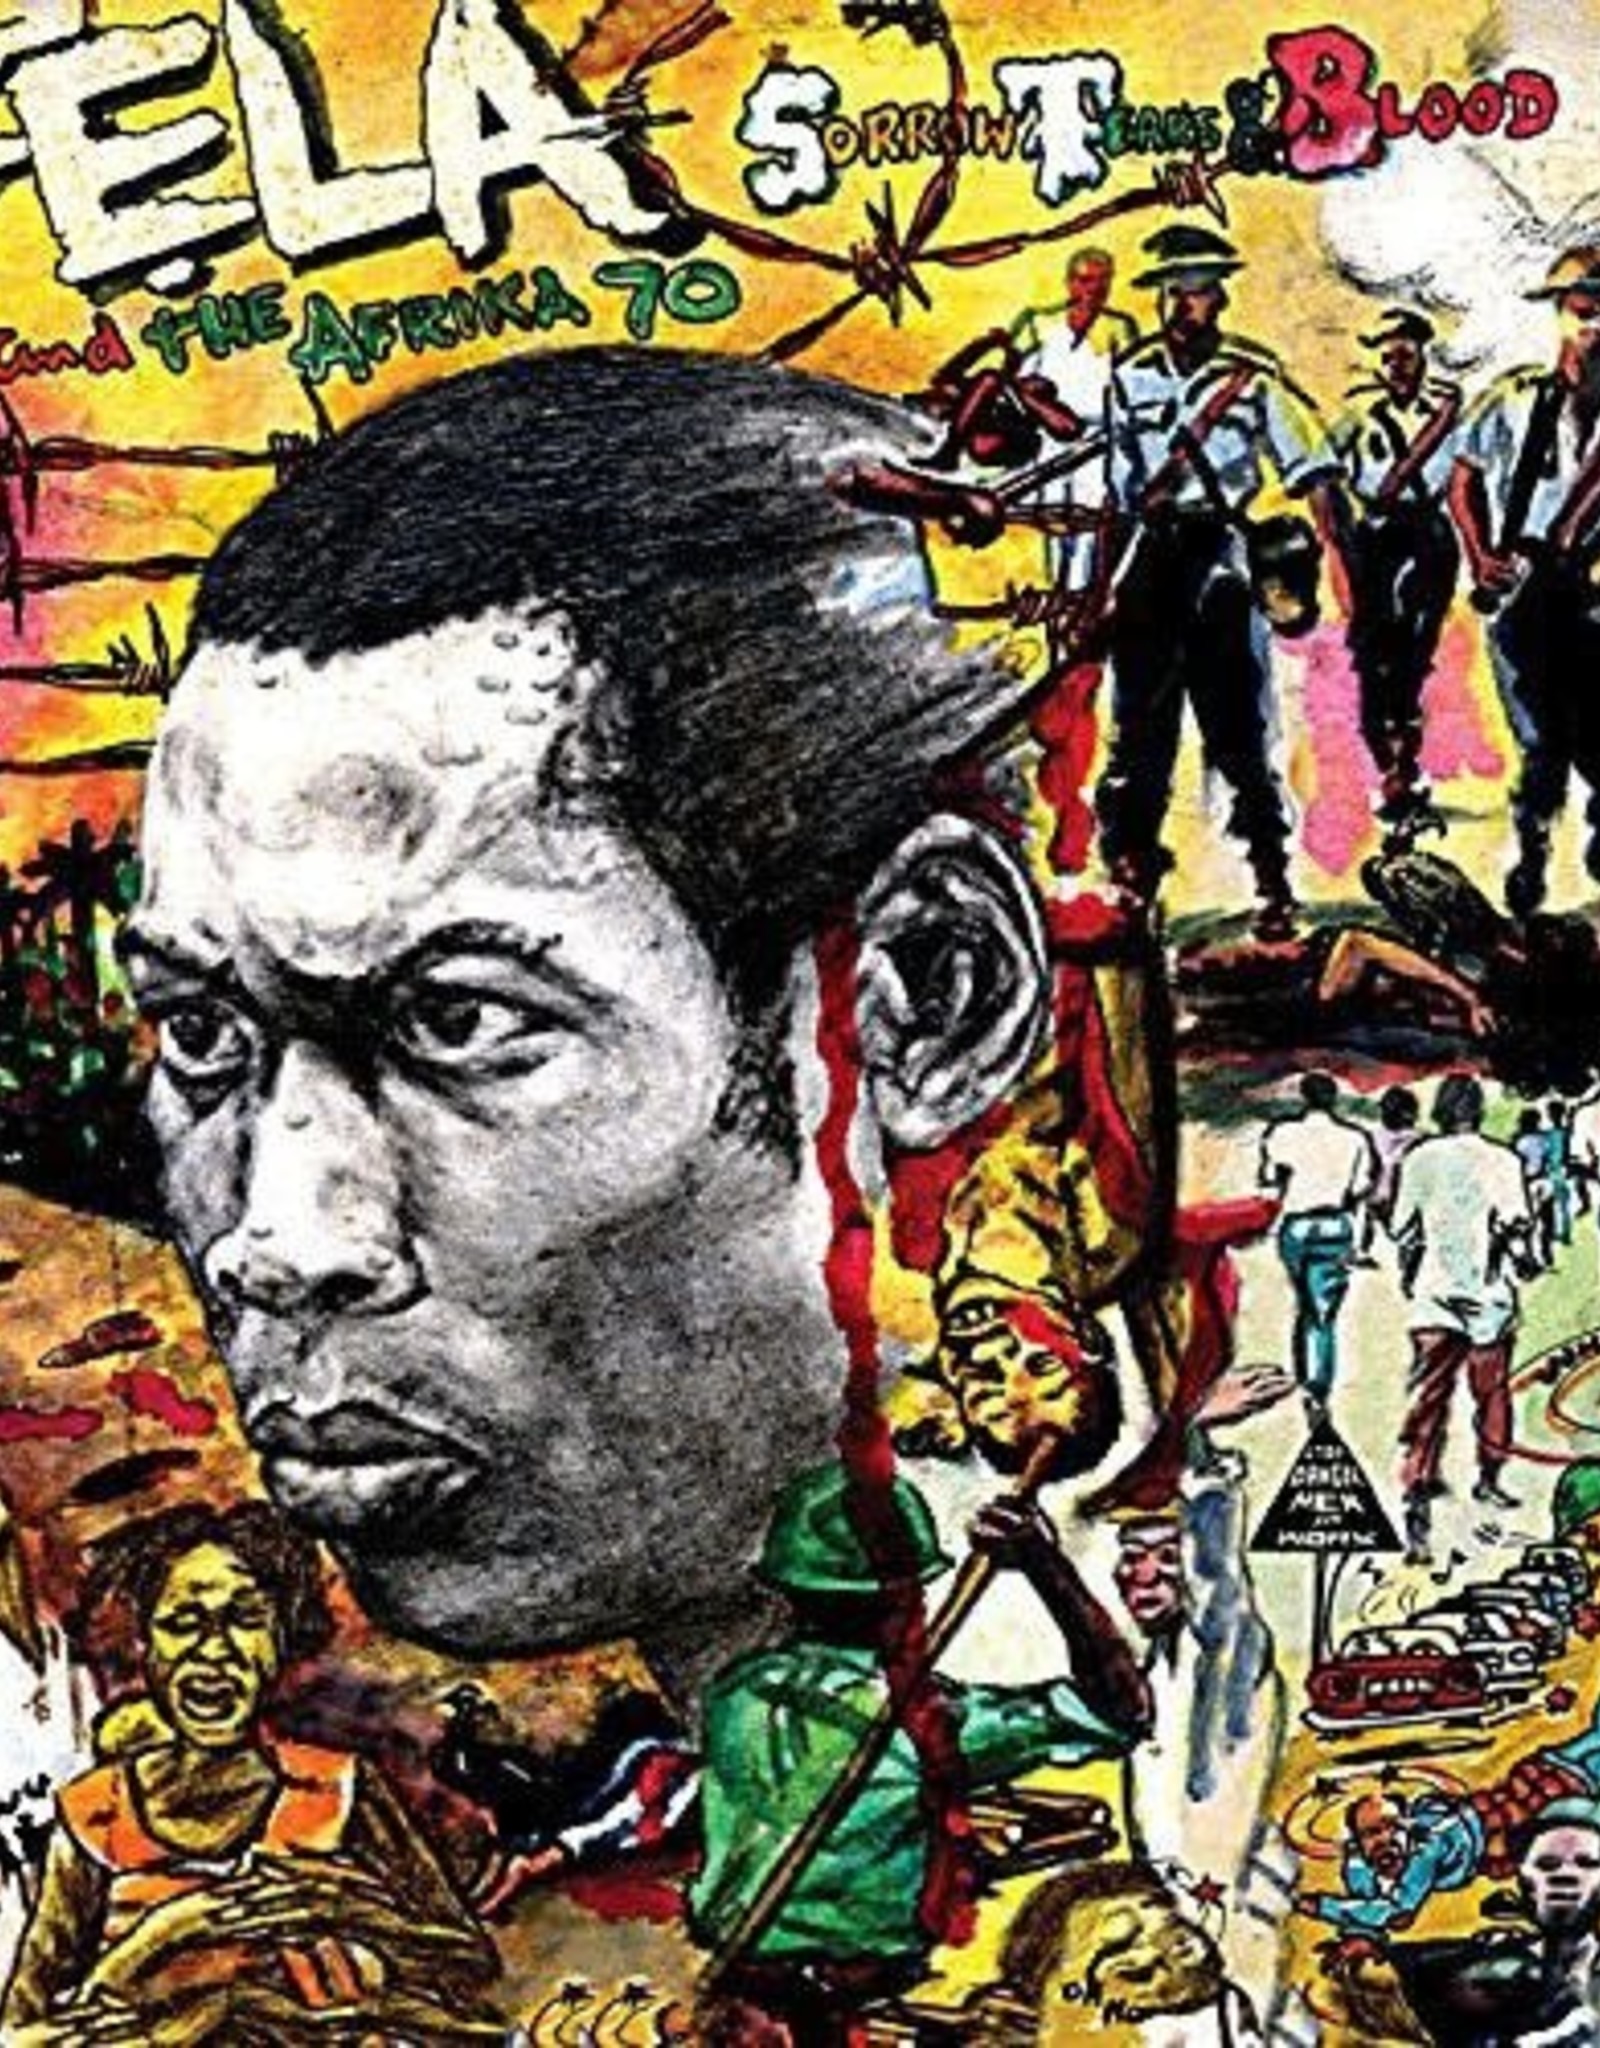 Fela Kuti - Sorrow, Tears and Blood